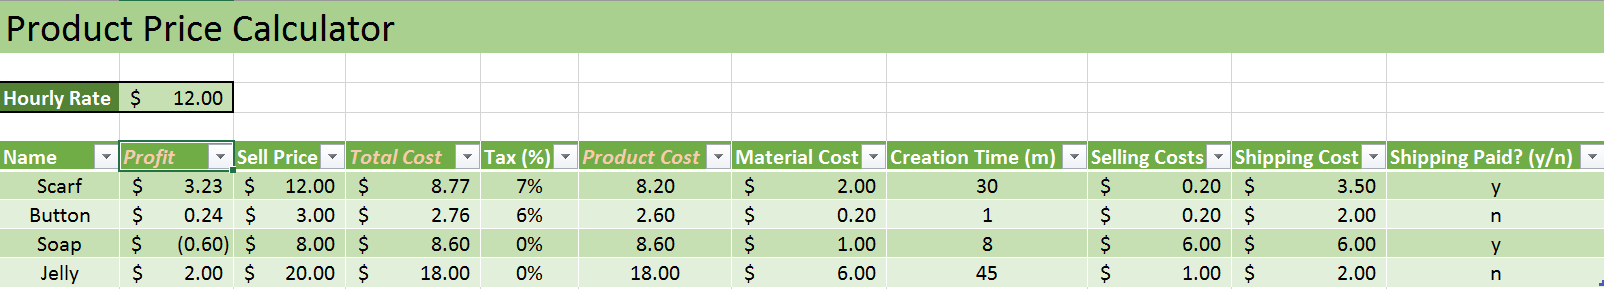 Product Management - Price Calculator